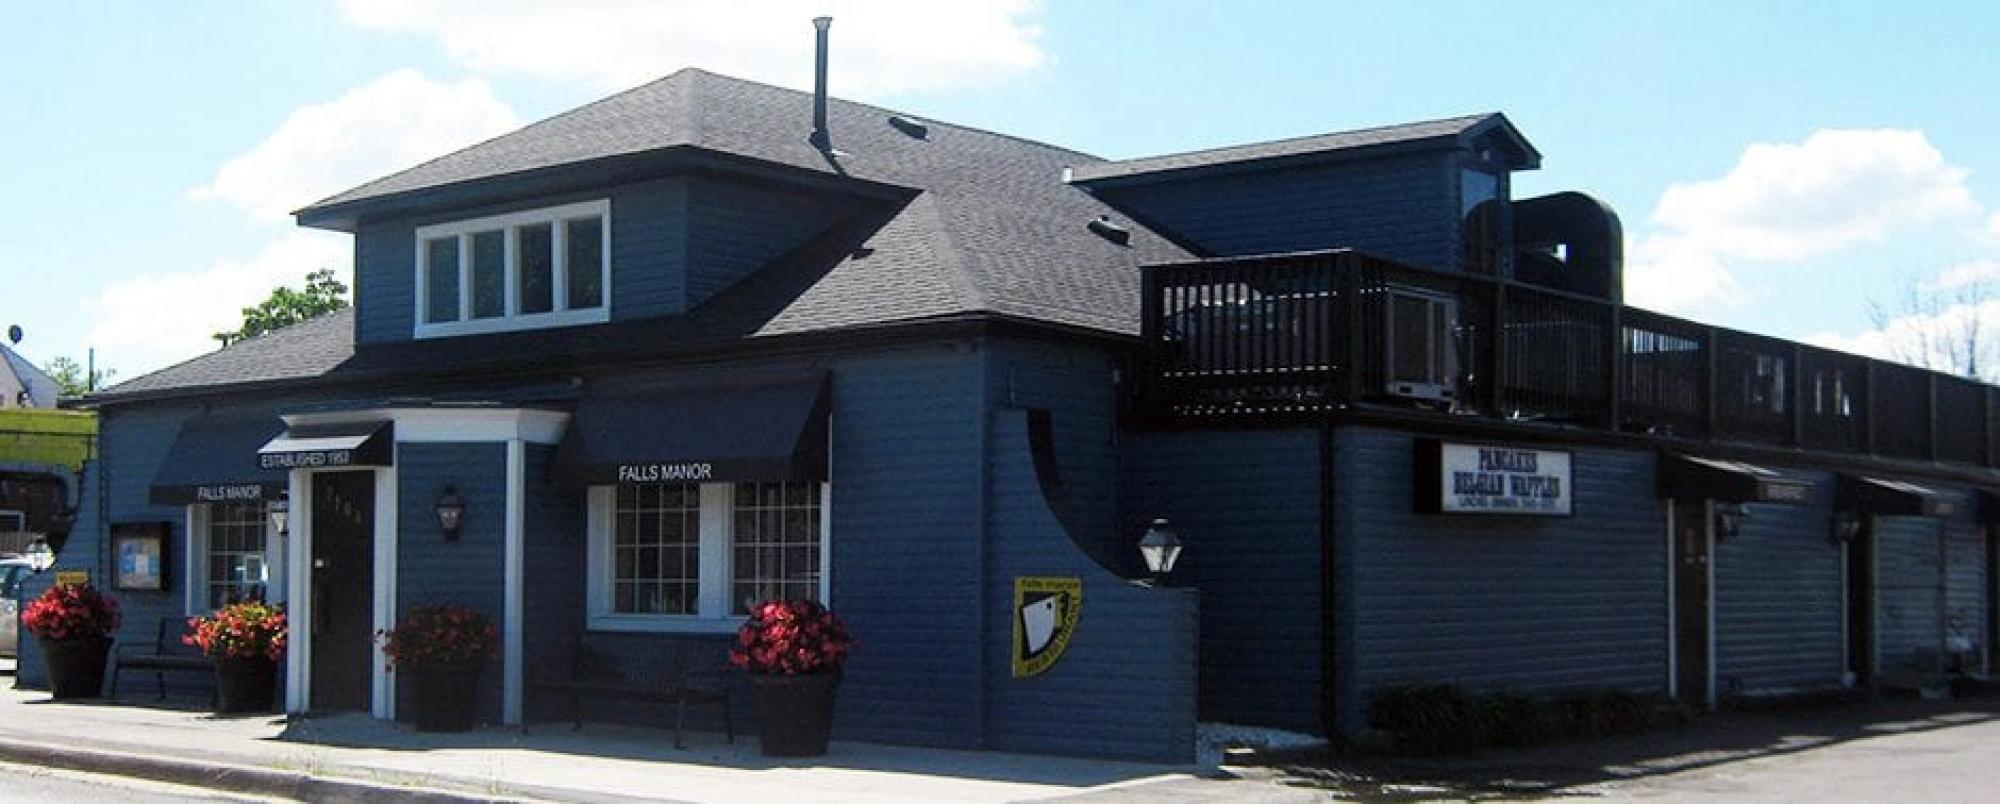 Picture of Restaurant For Sale in Niagara Falls, Ontario, Canada